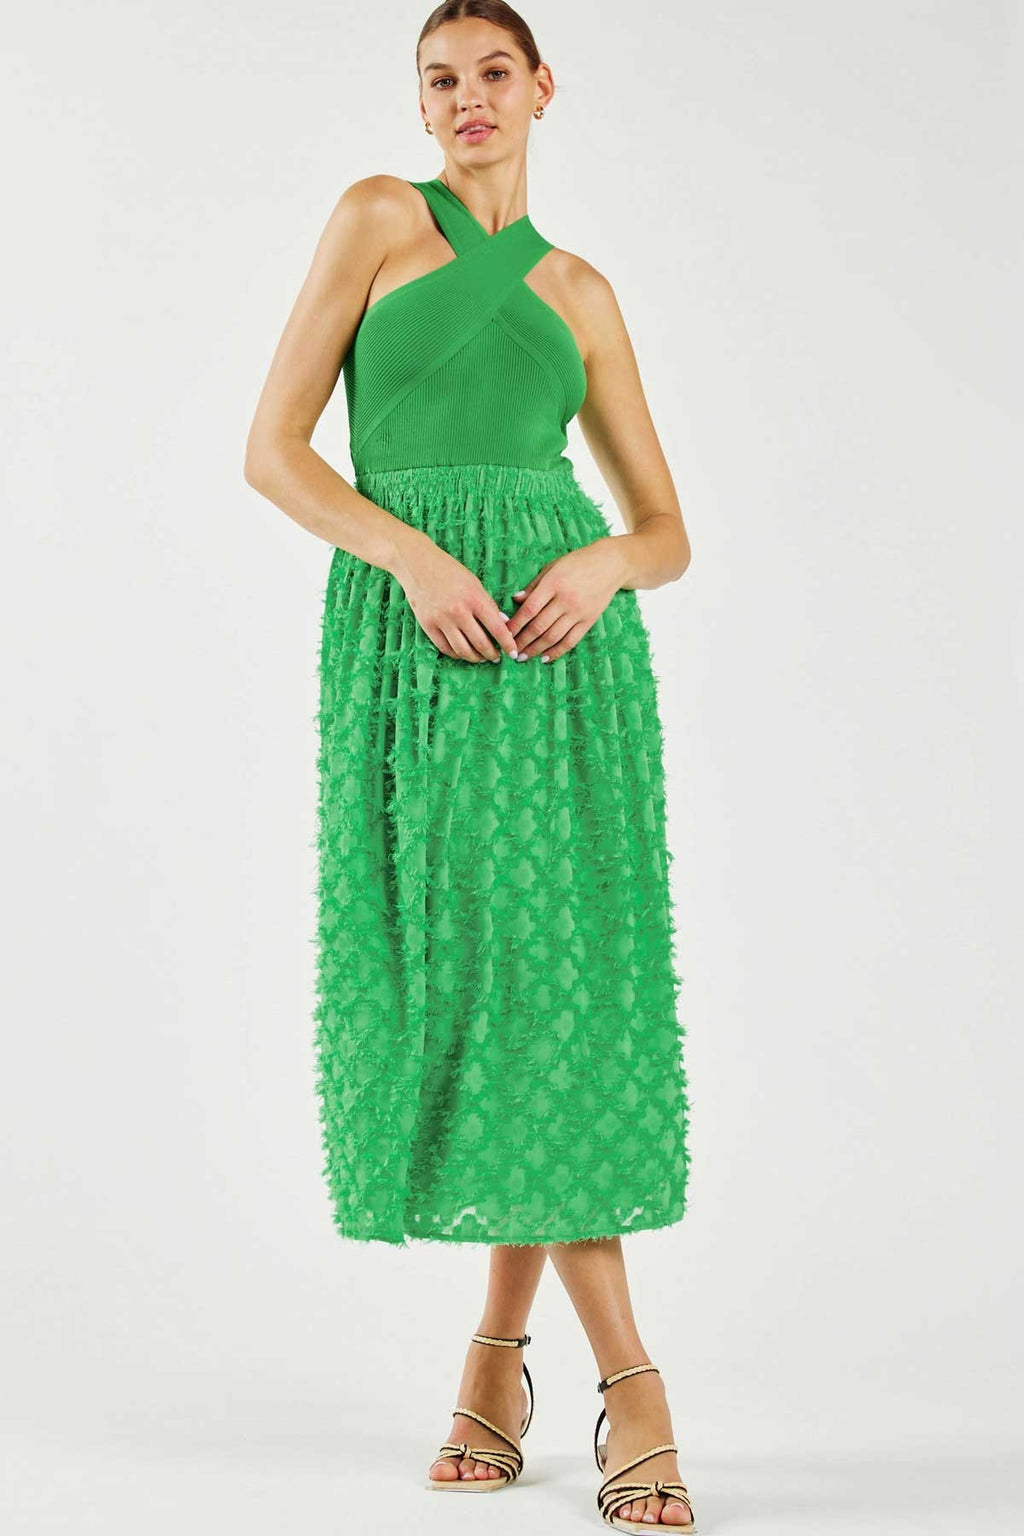 Current Air Apple Green Textured Halter Midi Dress